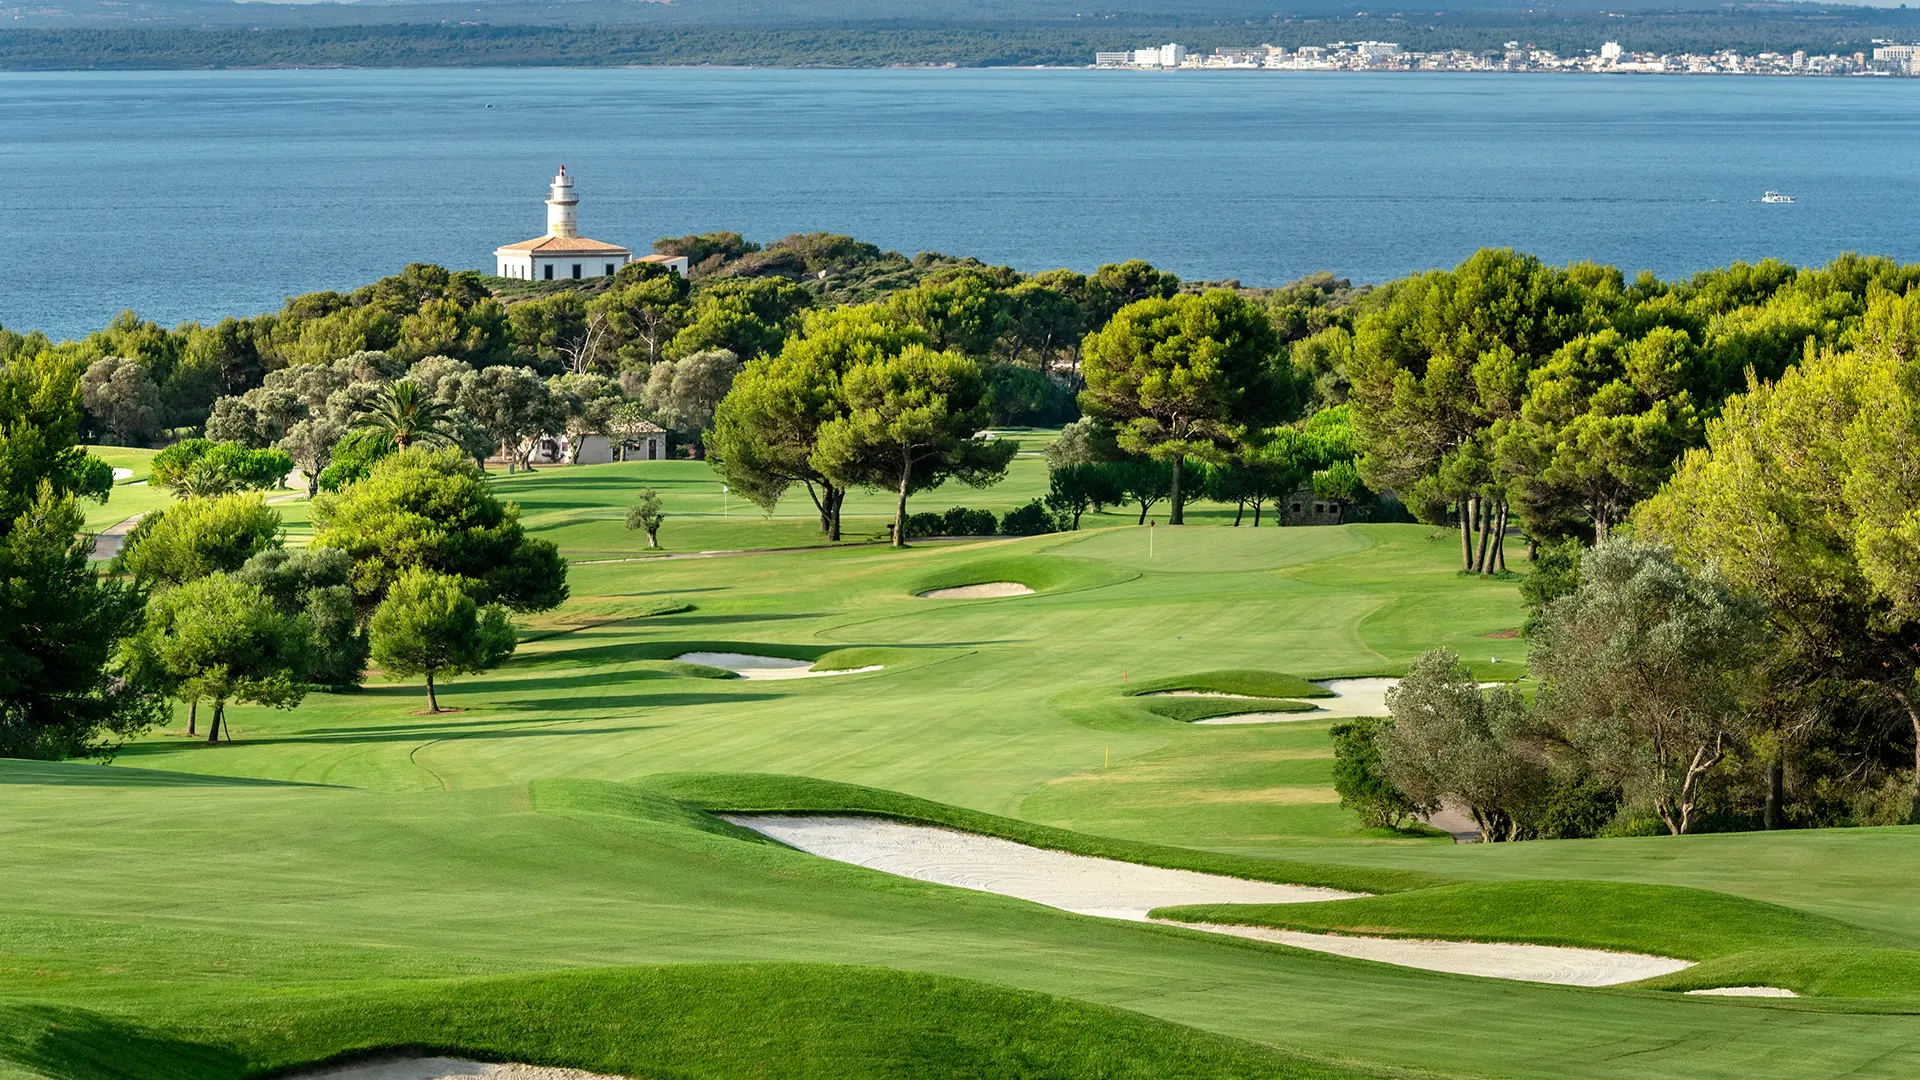 Spain golf holidays - Fuerte Marbella Spain - Photo 1